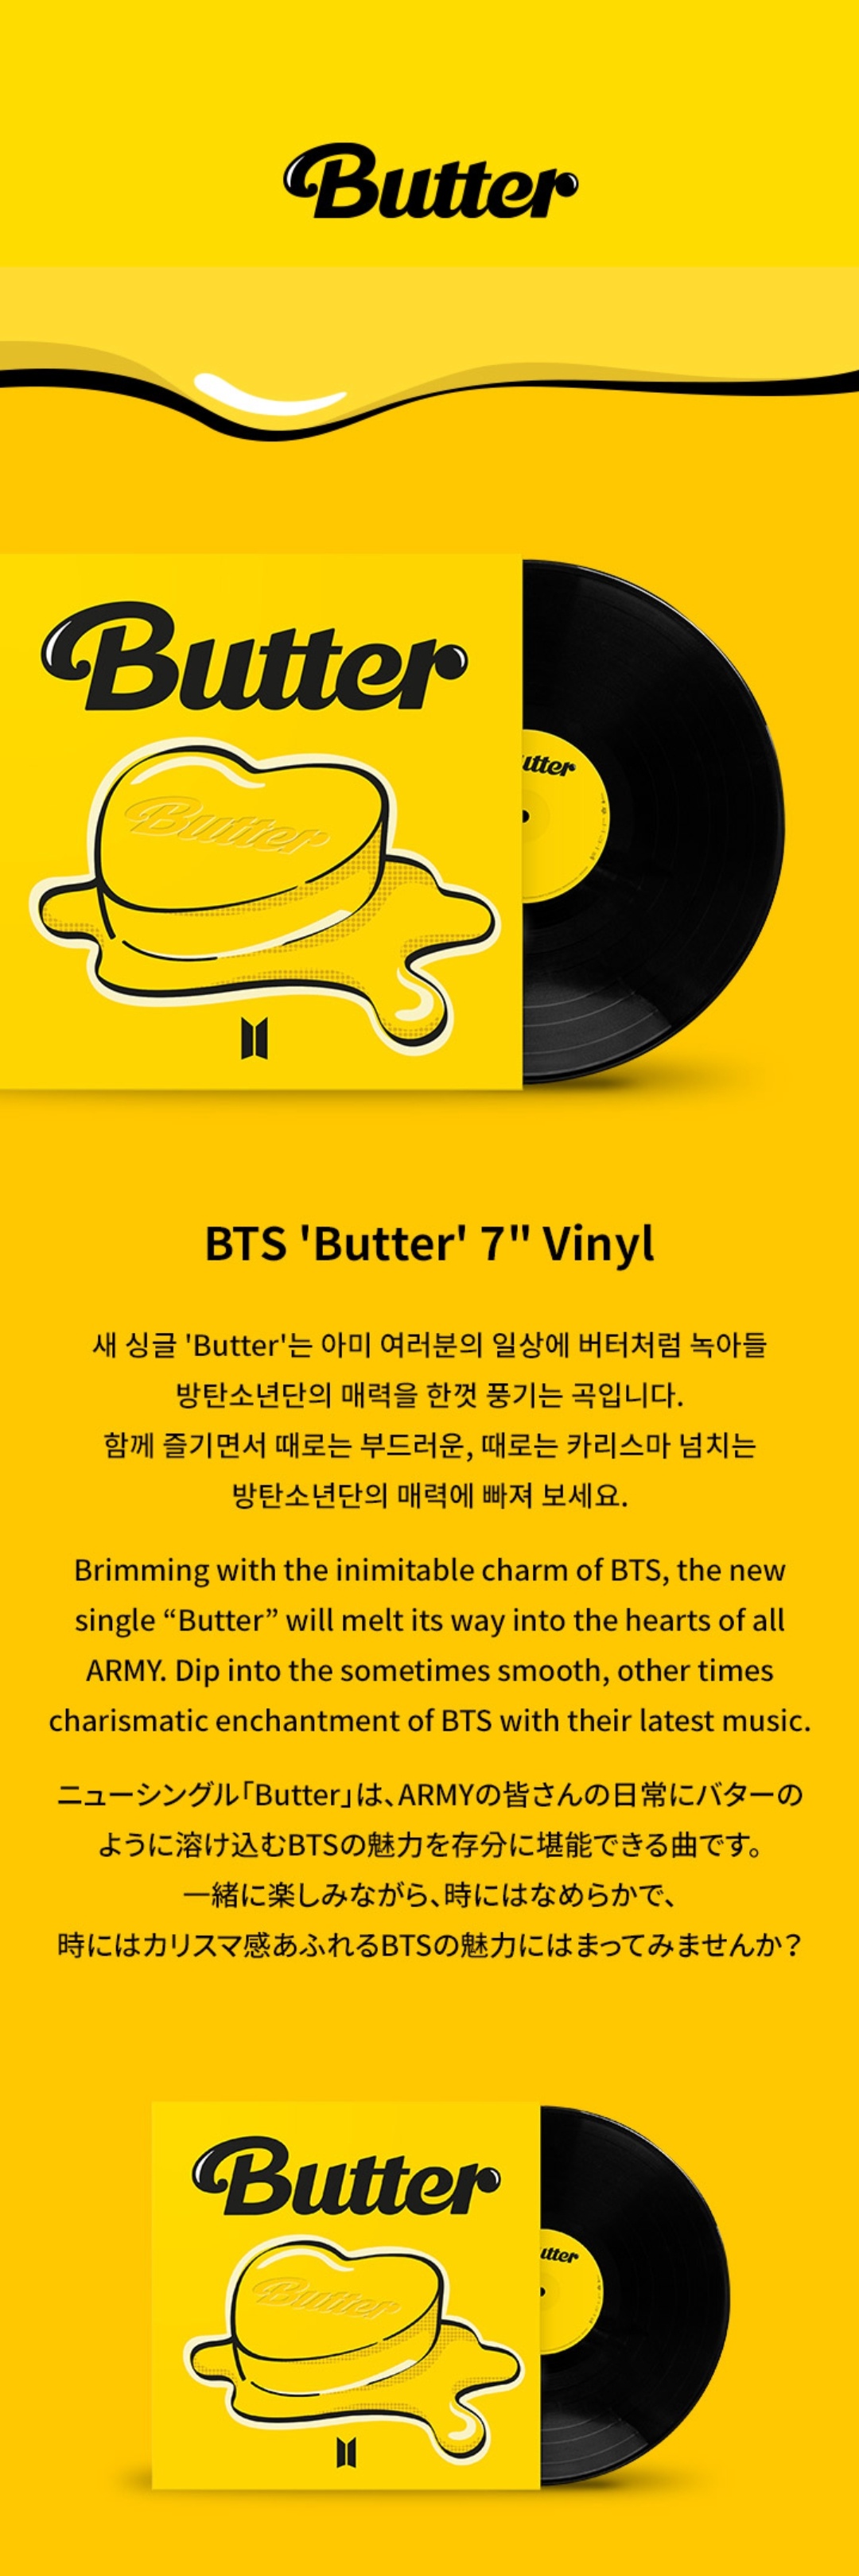 BTS Butter Vinyl and Cassette set